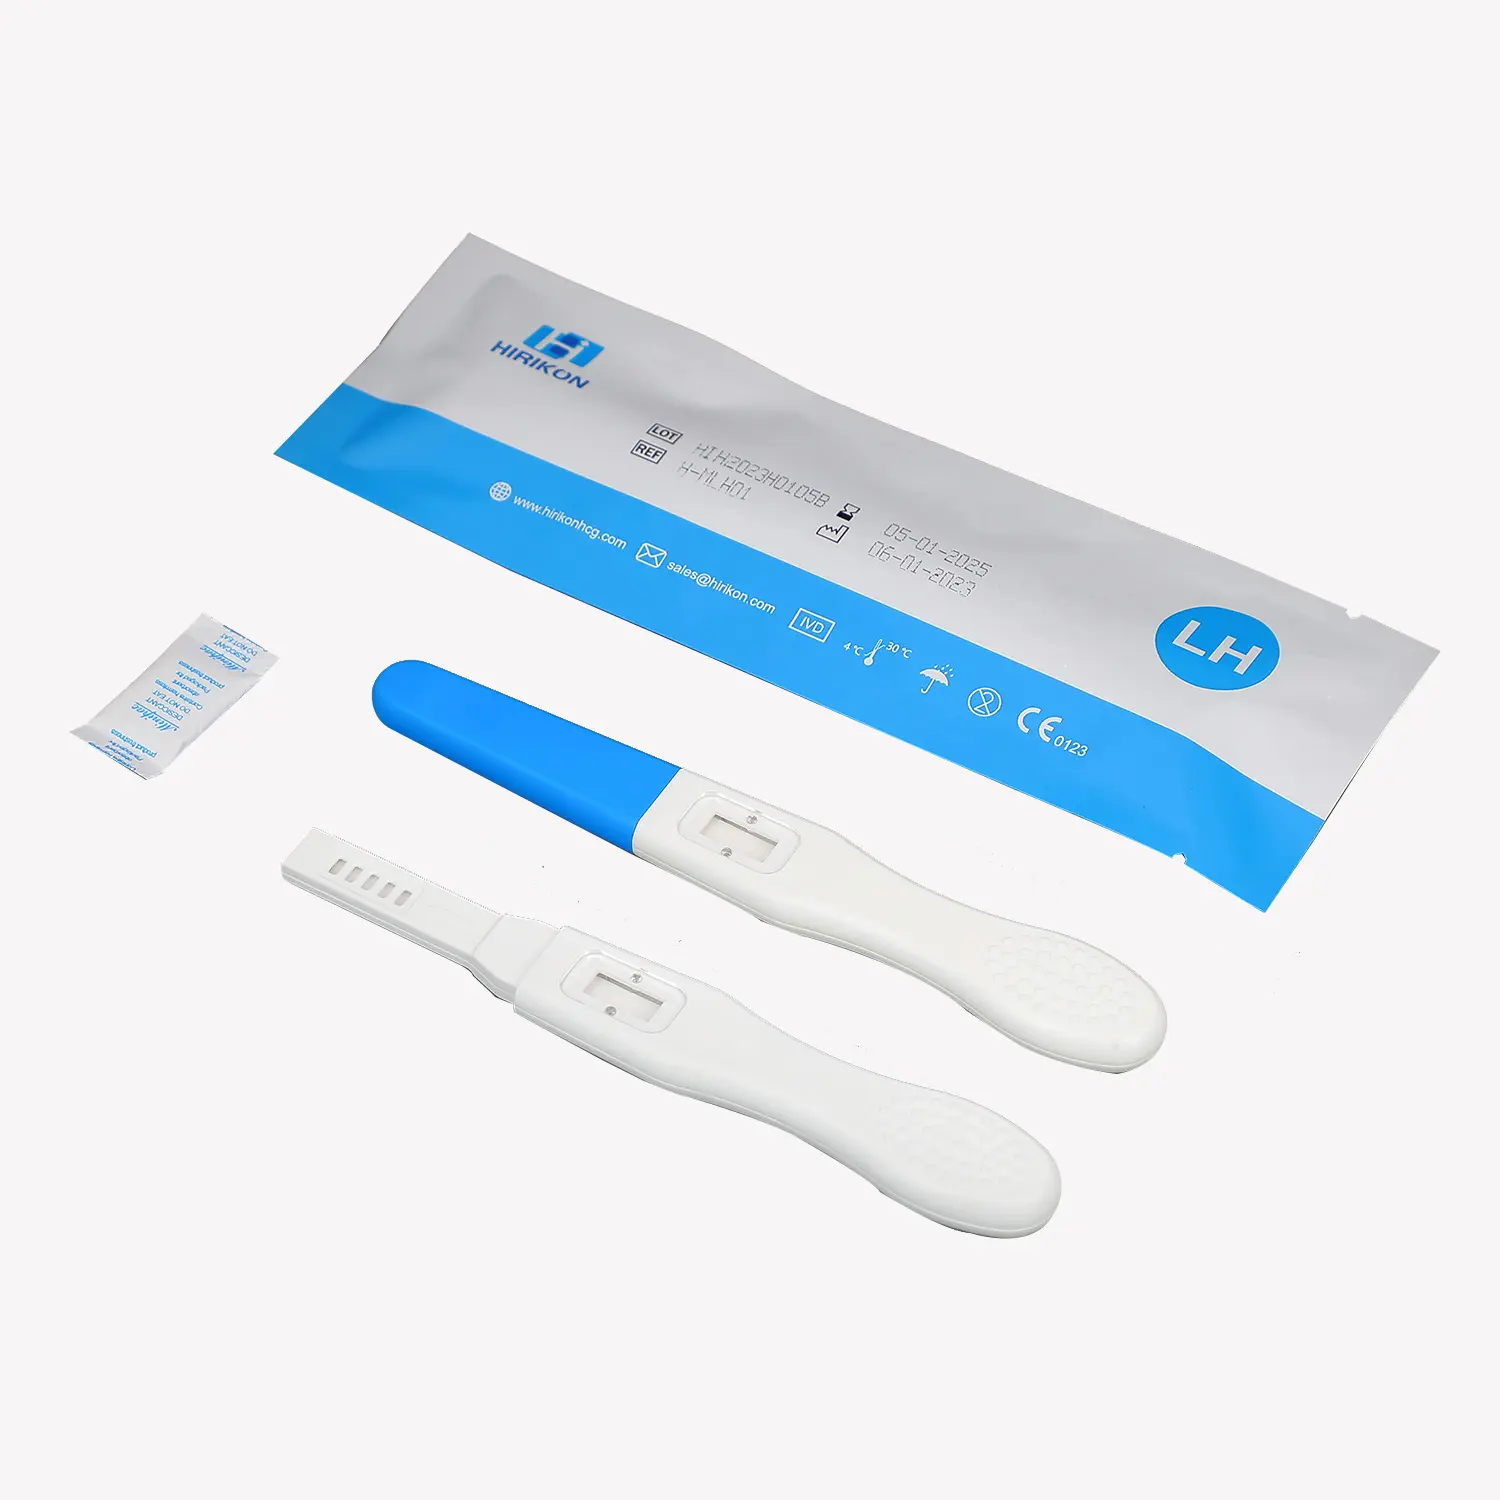 Mejor tira de prueba de embarazo/digital/Midstream HCG fabricantes de kits de prueba de embarazo